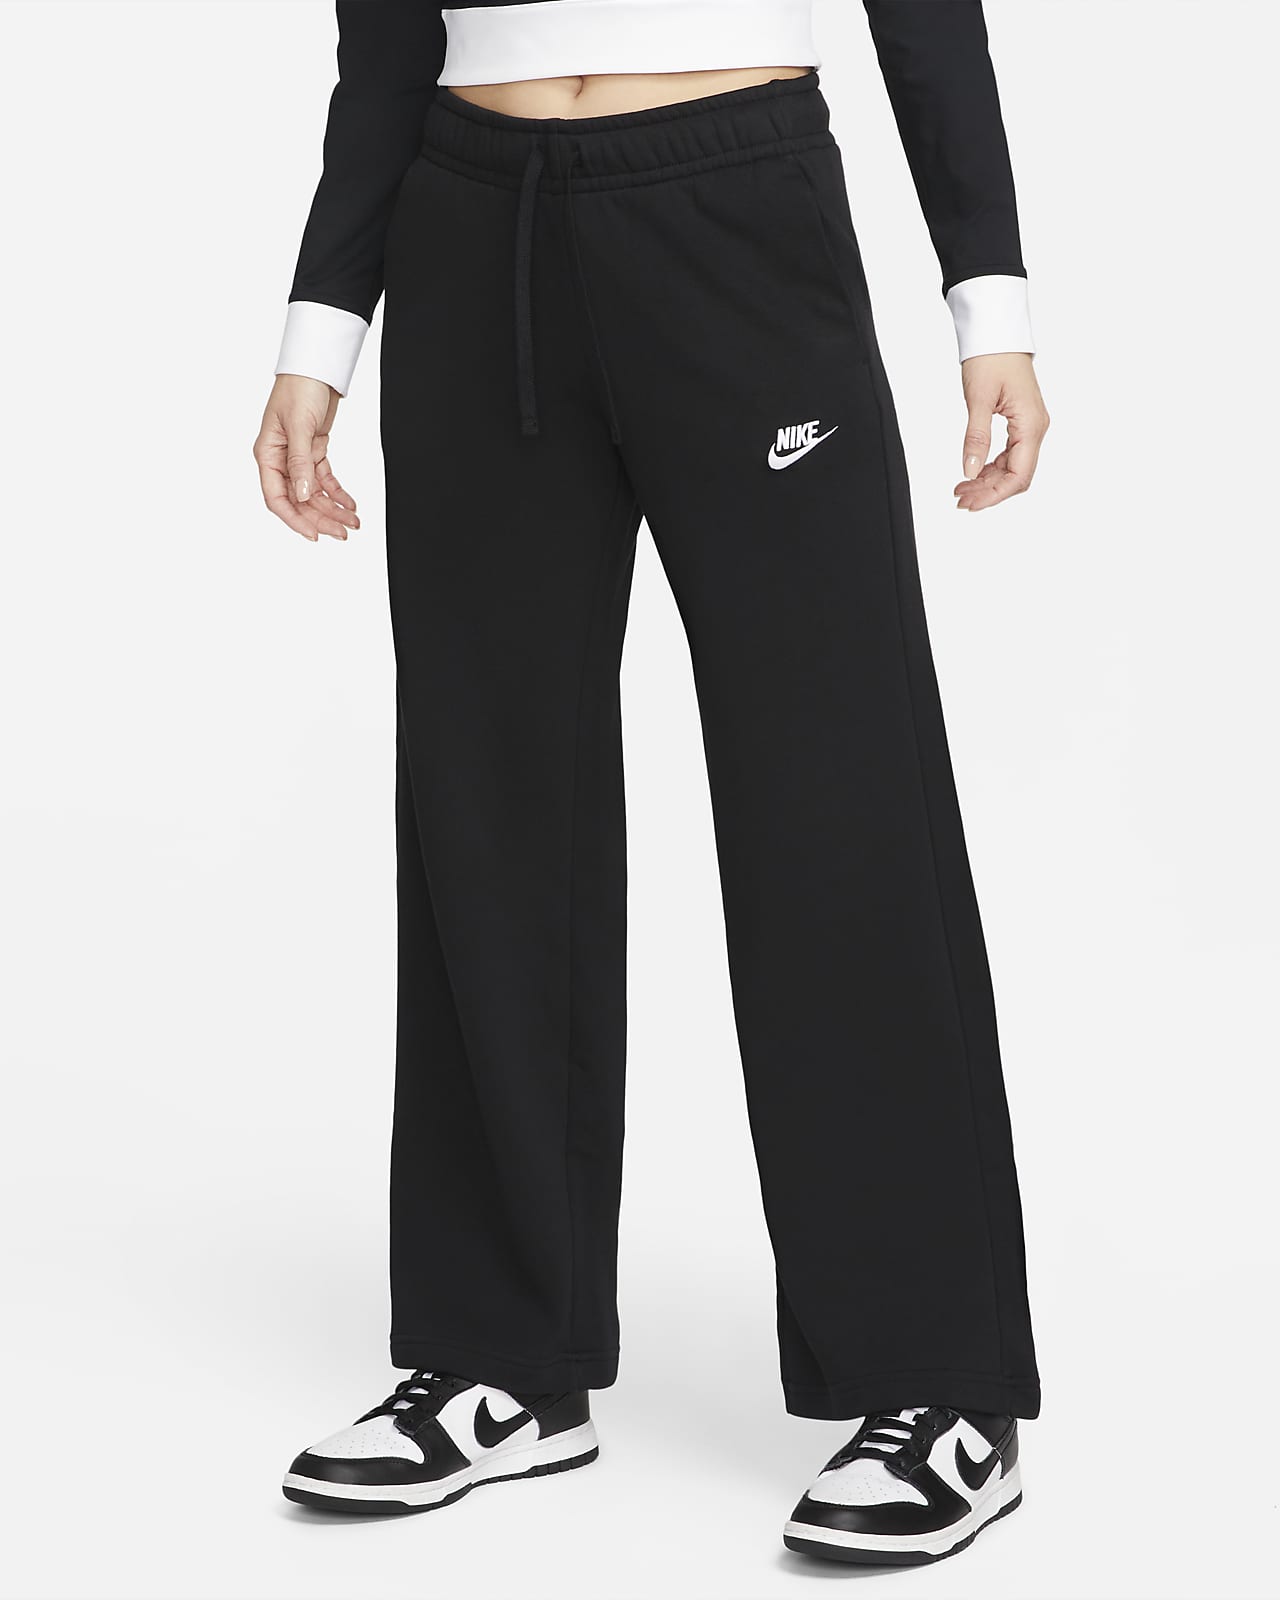 Nike ナイキ スウェットパンツ パンツ Sweatpant フリース